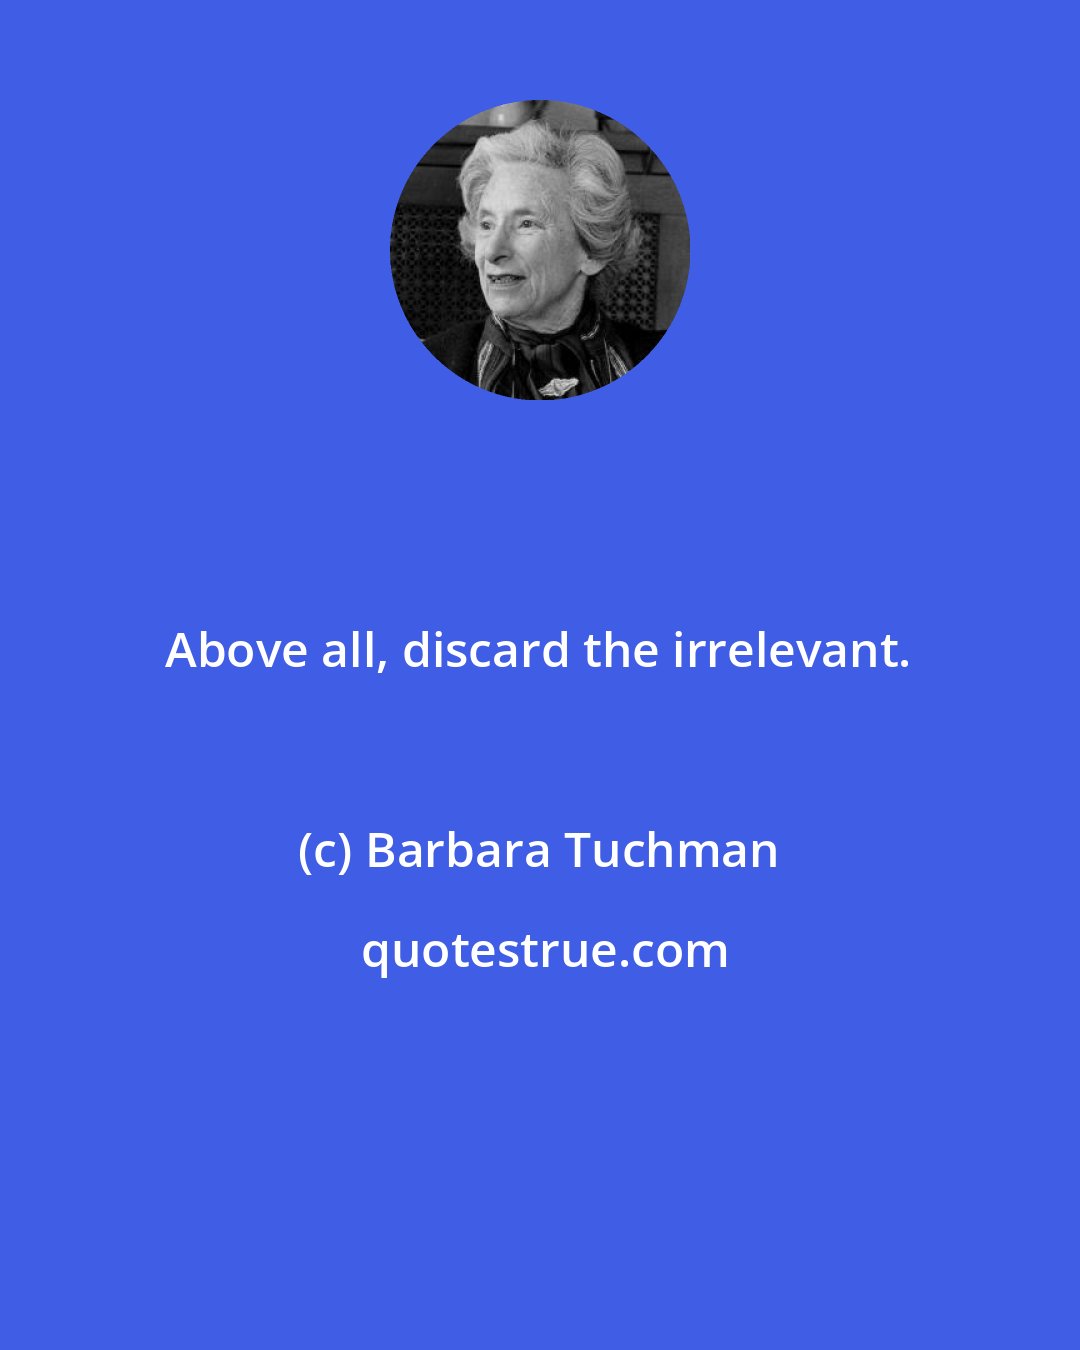 Barbara Tuchman: Above all, discard the irrelevant.